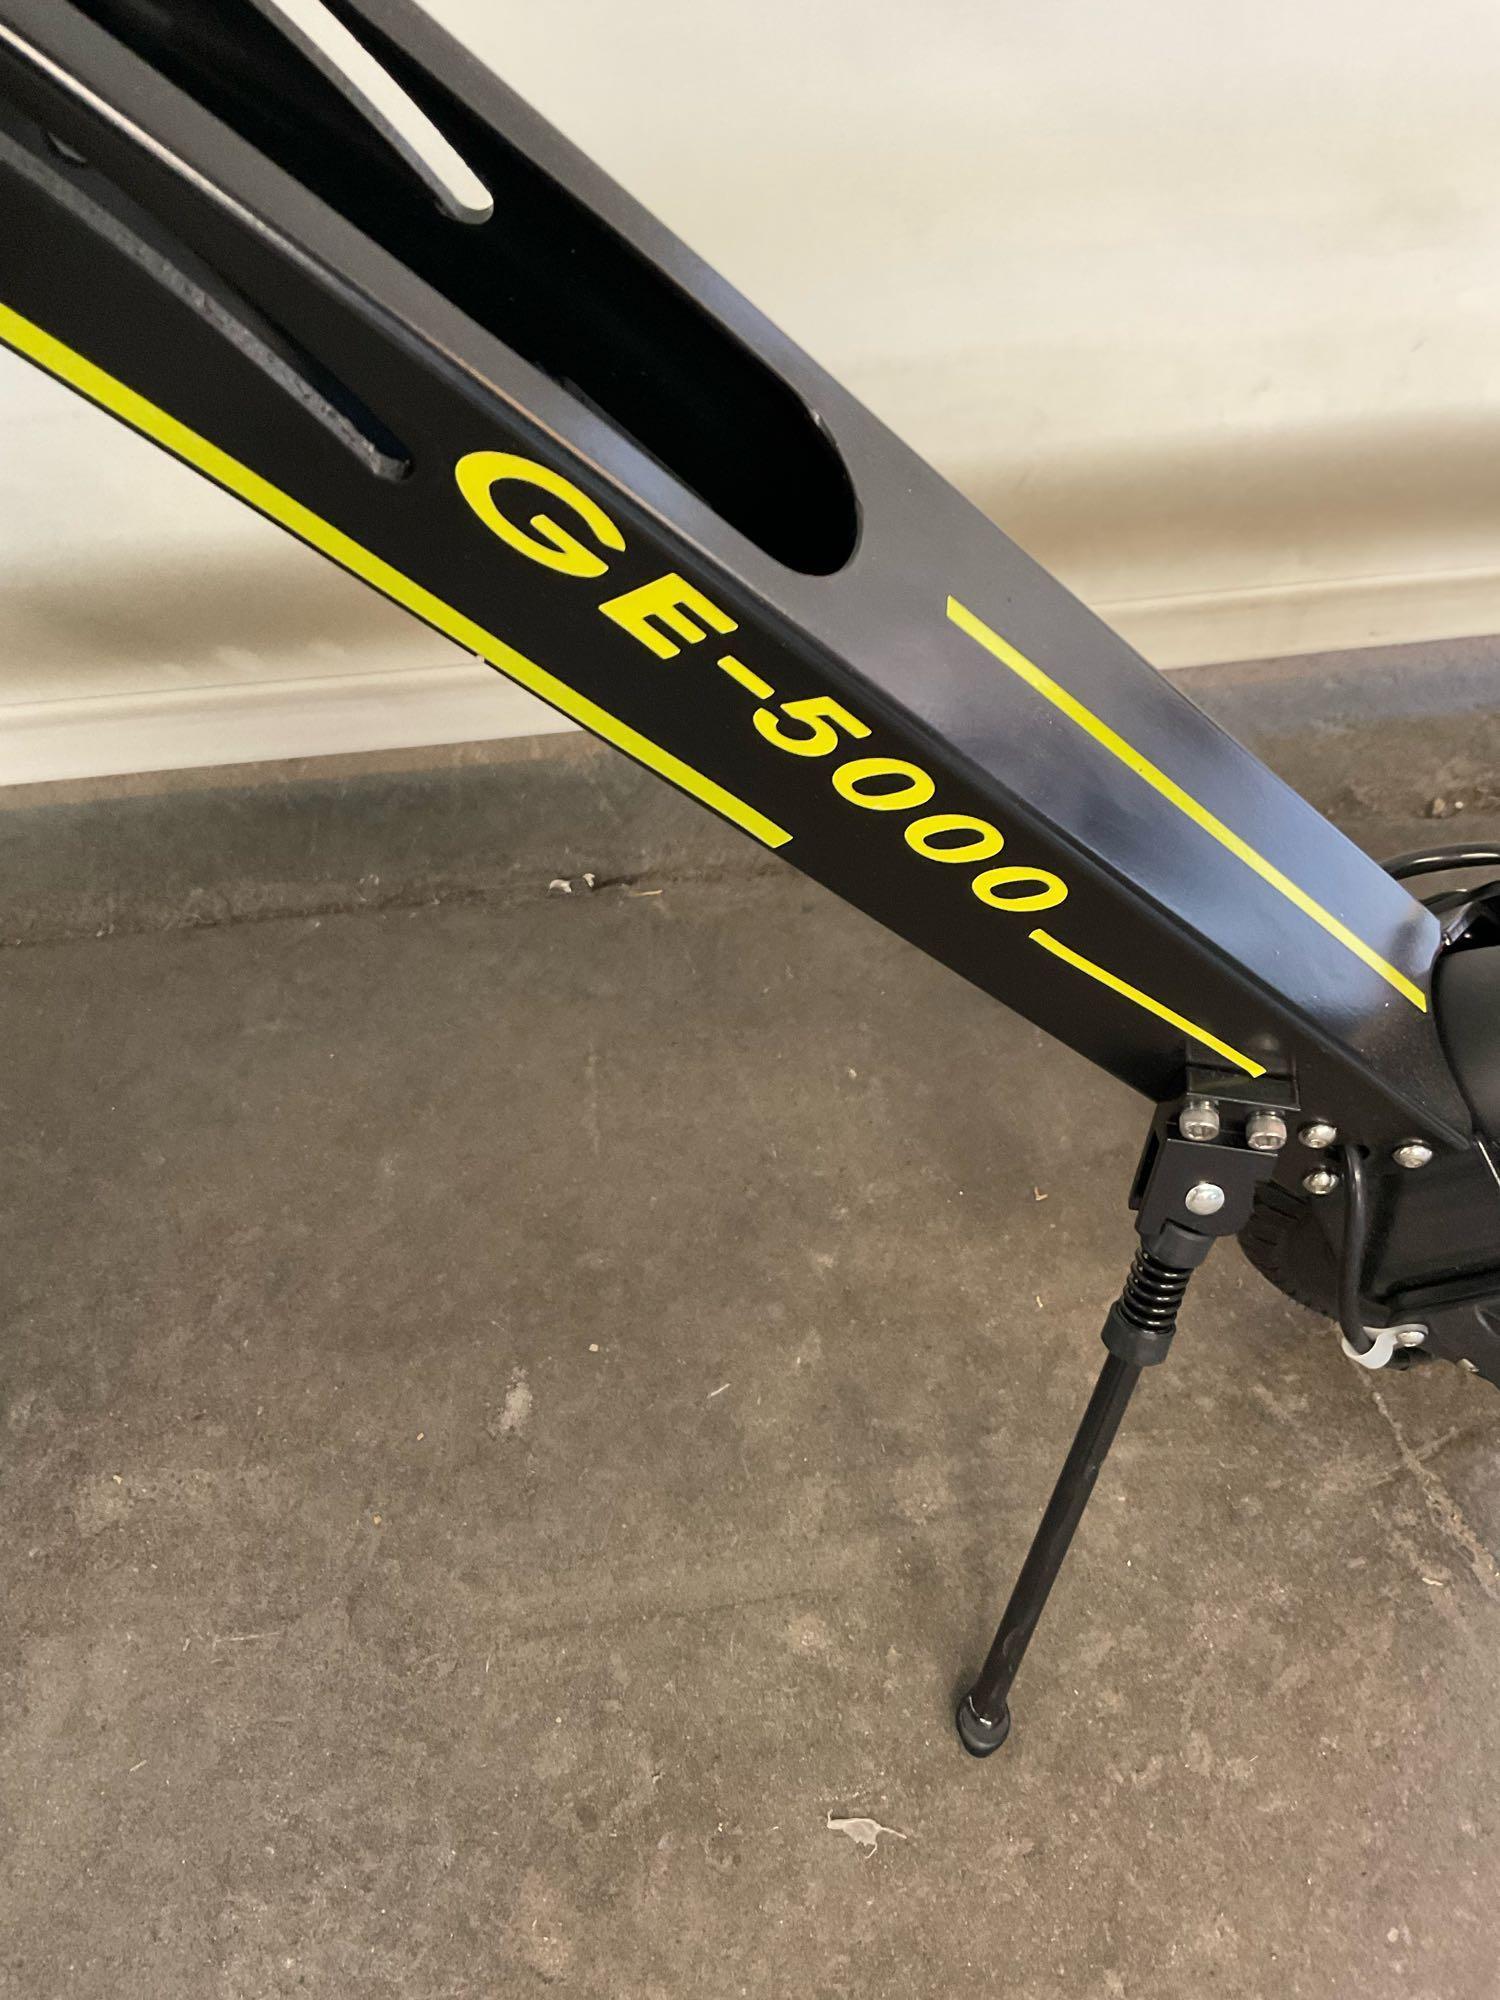 New Unopened box Comfygo electric e-bike model GE-5000. Black